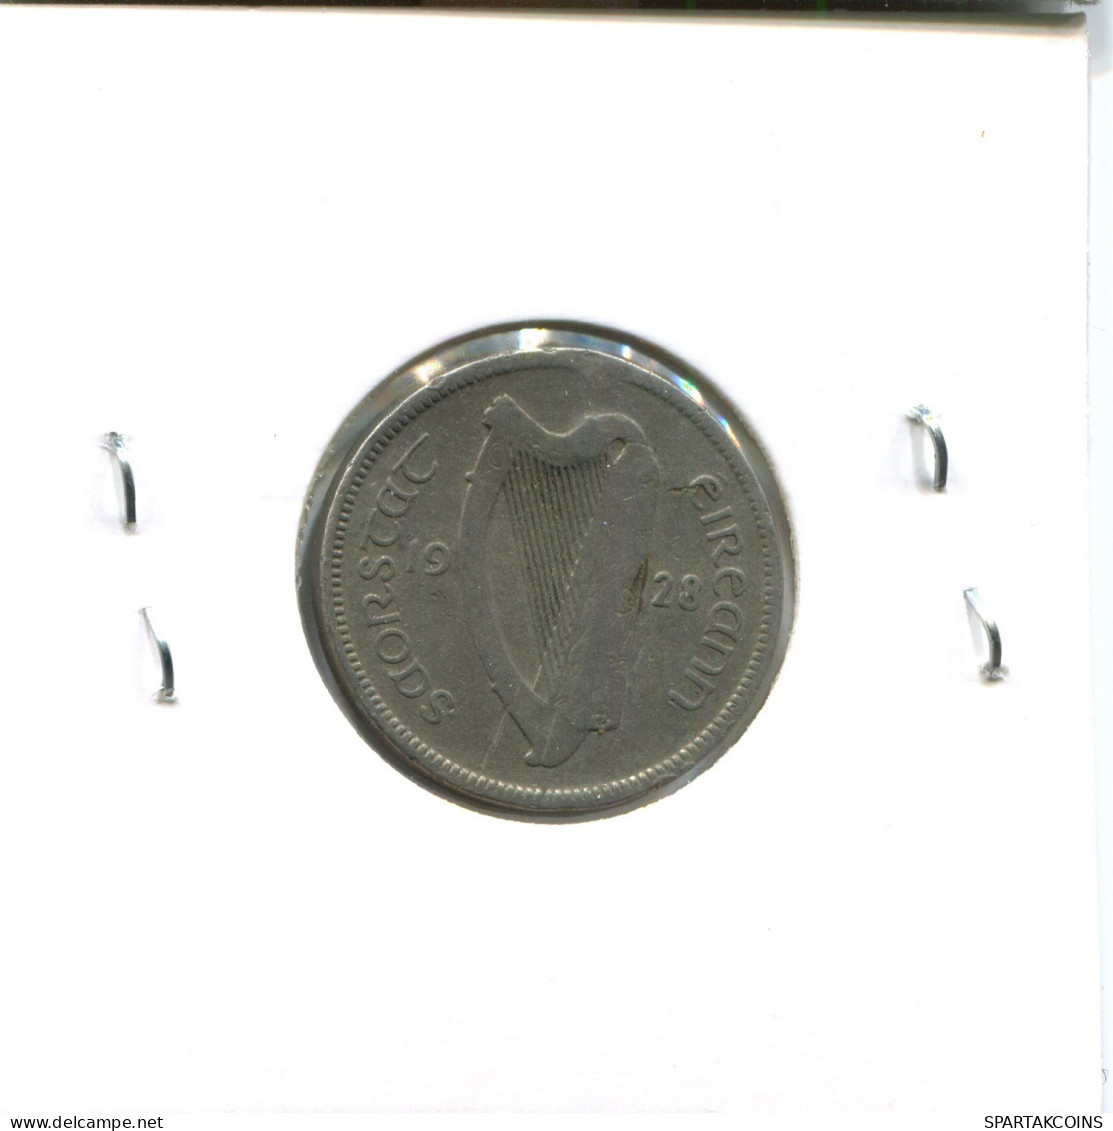 6 PENCE 1928 IRELAND Coin #AY180.2.U.A - Irlande